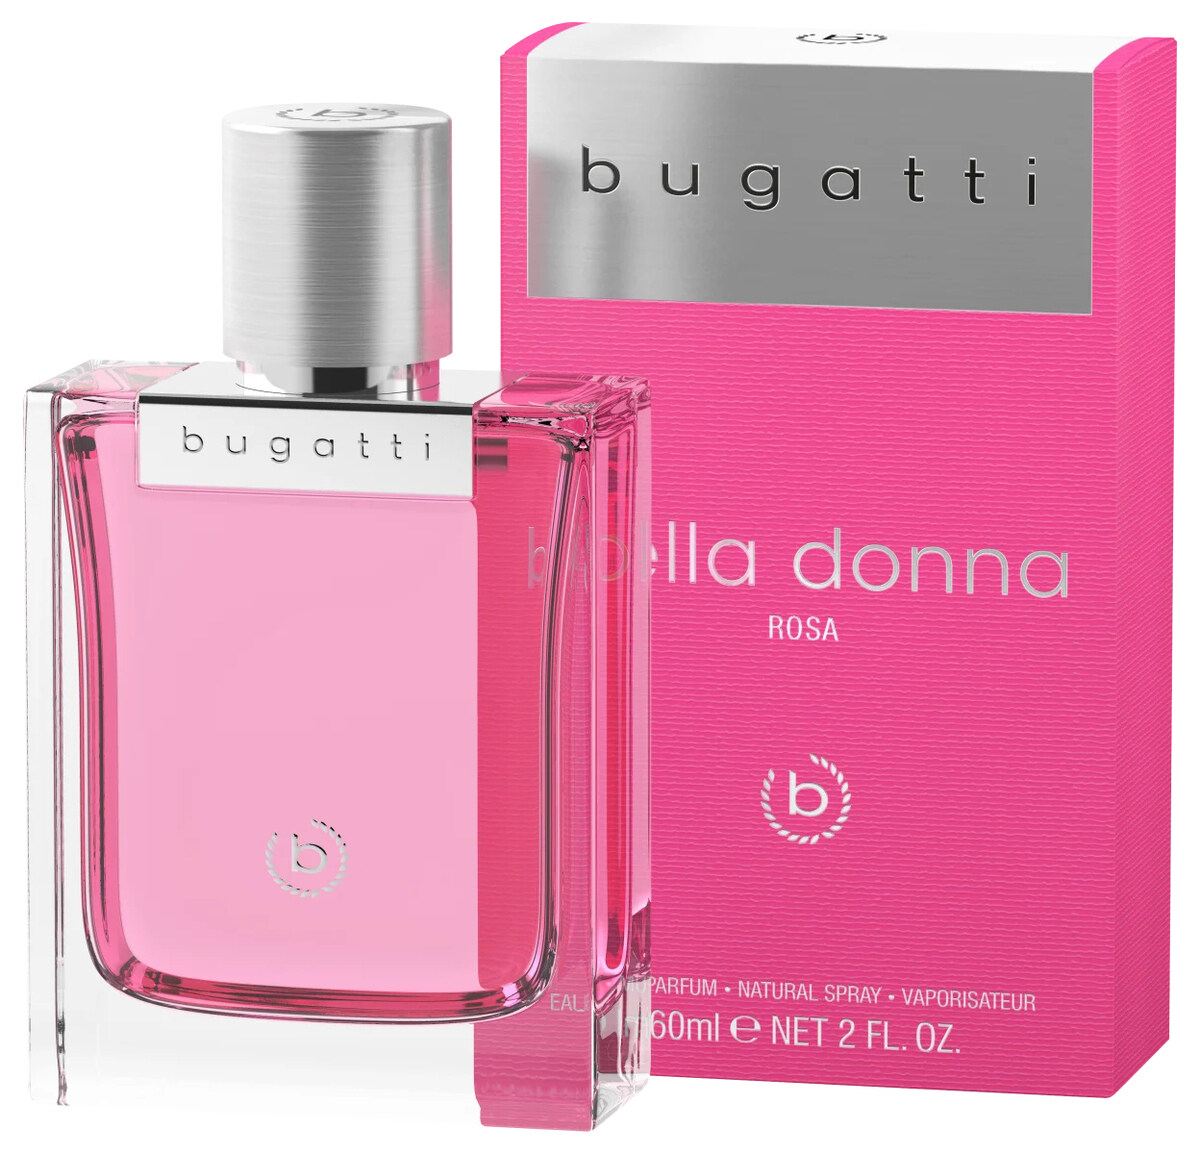 Perfume Reviews bugatti by Donna Rosa Facts Fashion » & Bella